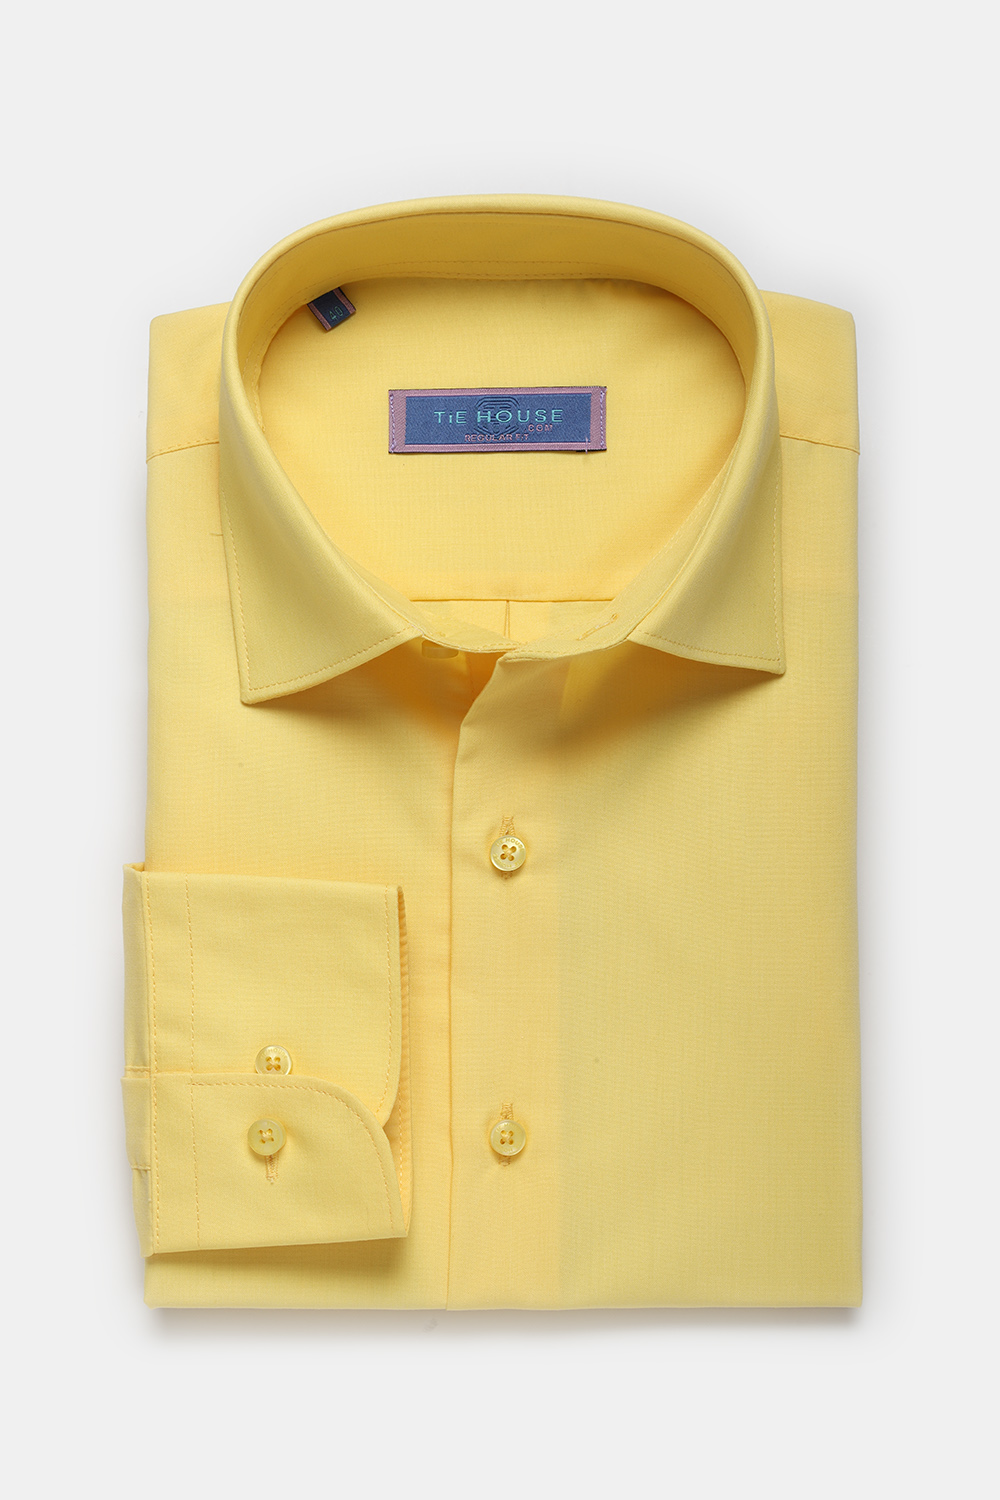 Regular fit Shirt Yellow - TIE HOUSE